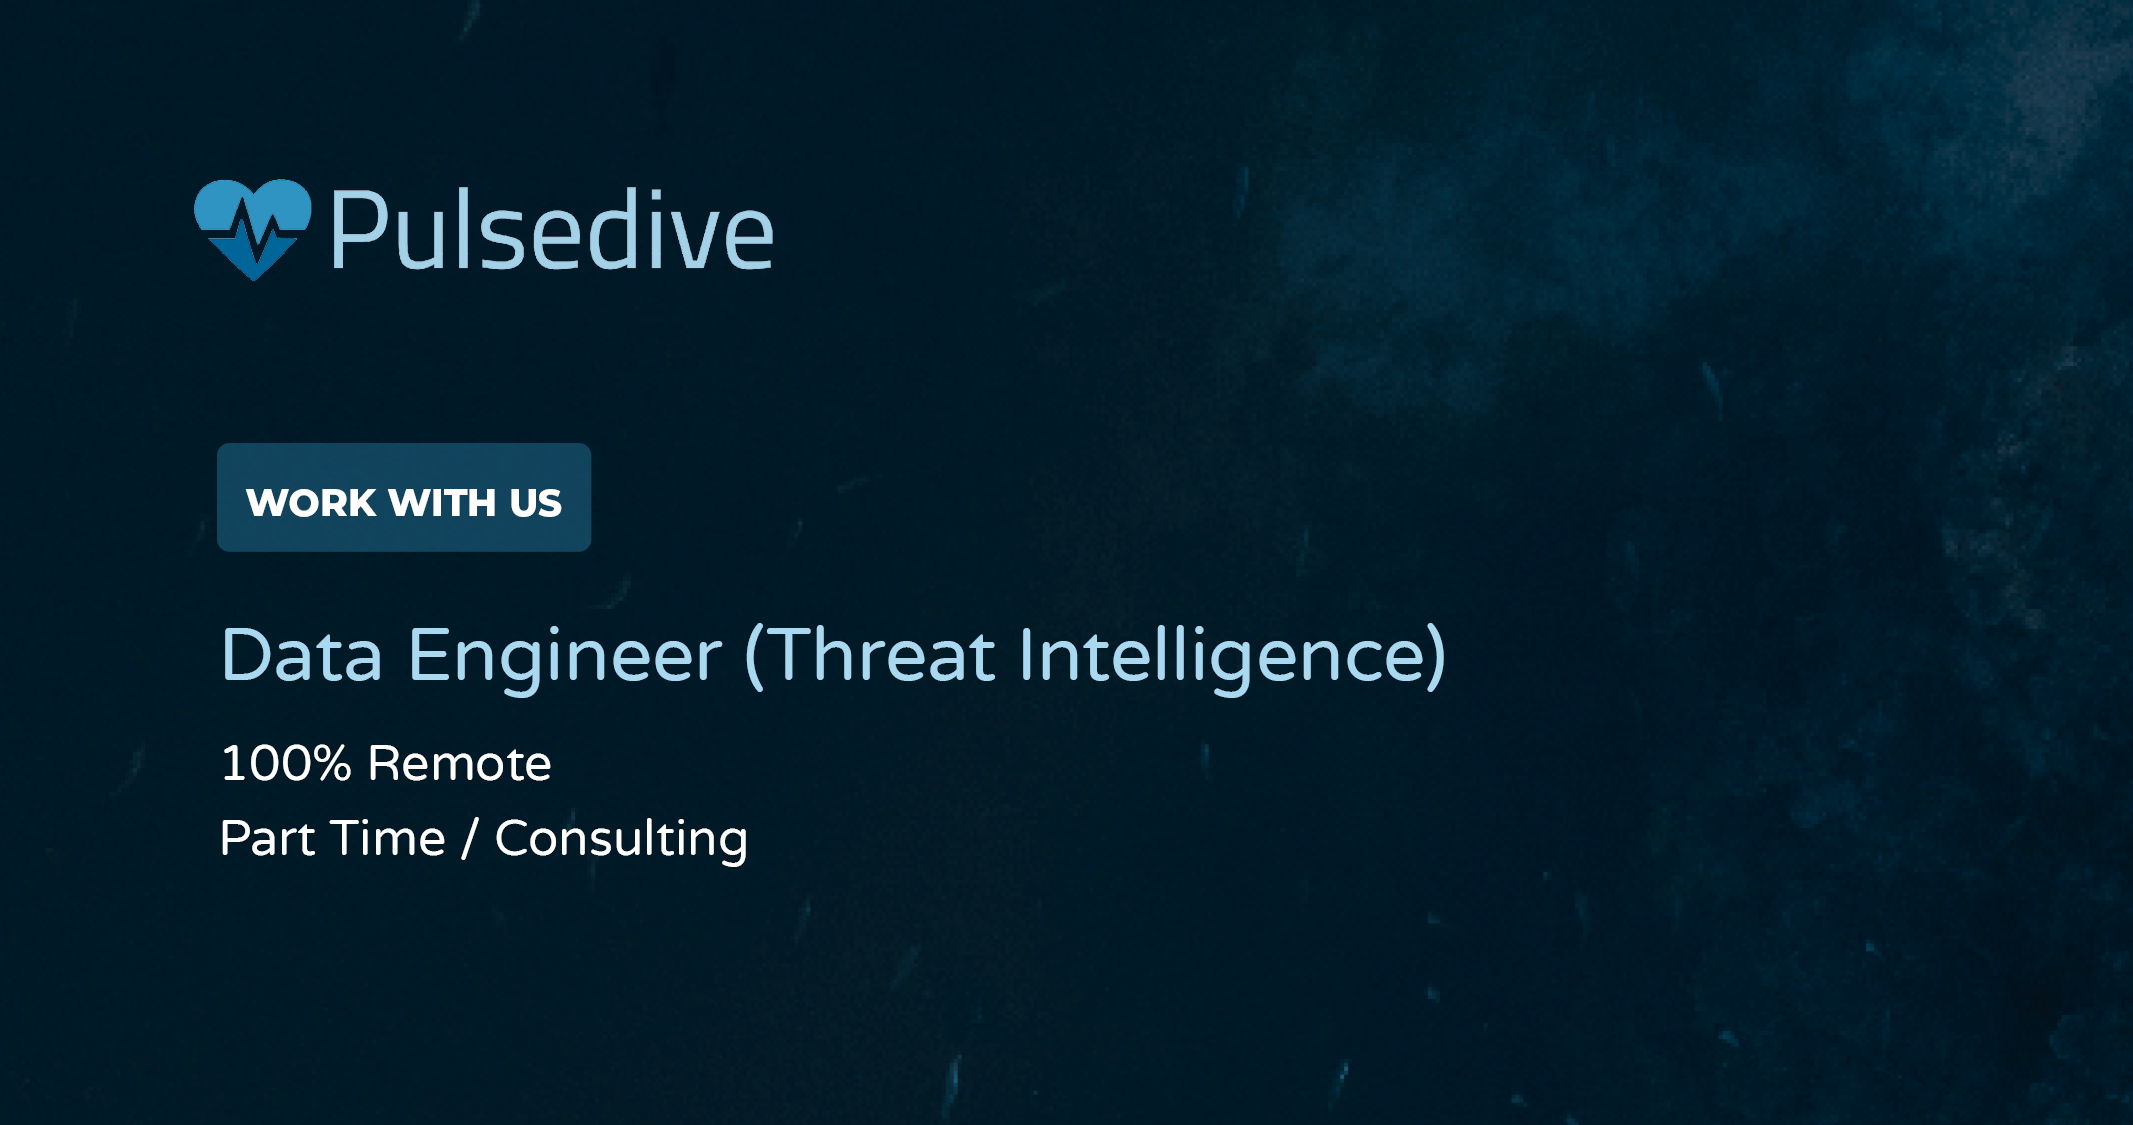 Work With Us: Data Engineer (Threat Intelligence)